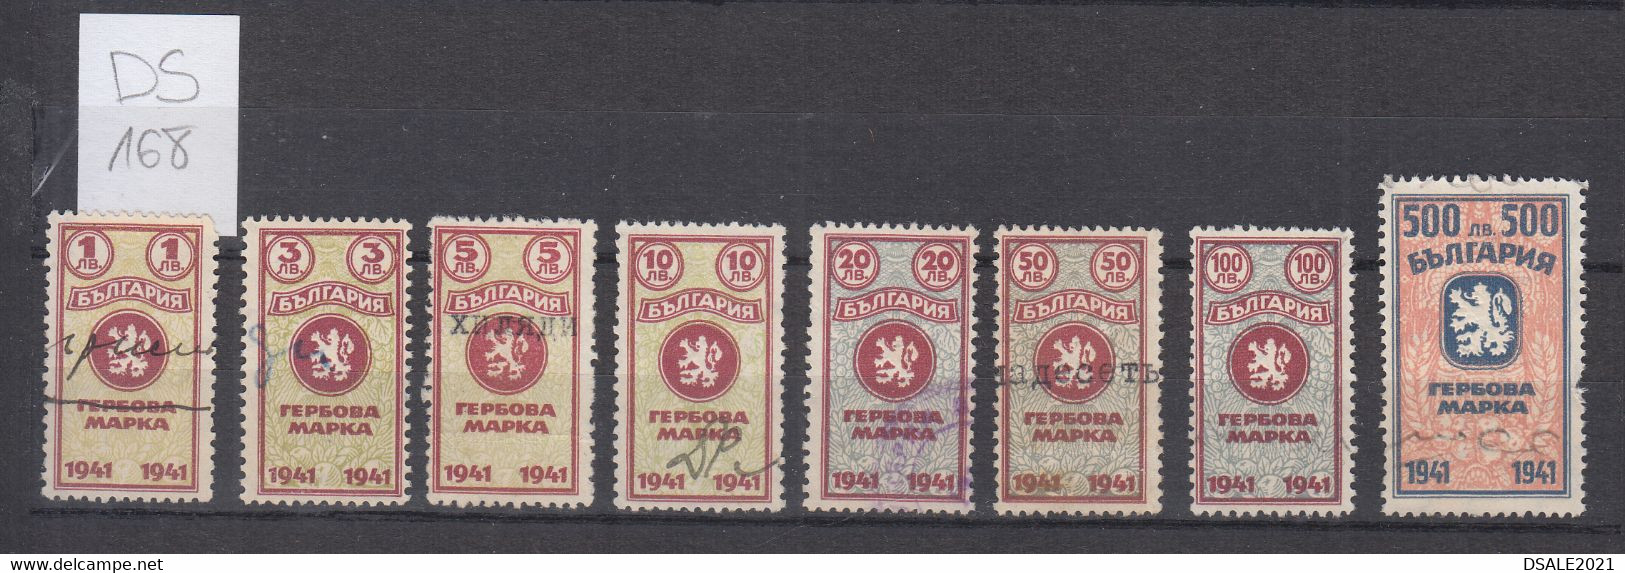 Bulgaria Bulgarie Bulgarije 1945 Bulgarian Fiscal Revenue Revenues Stamp Stamps (ds168) - Dienstzegels